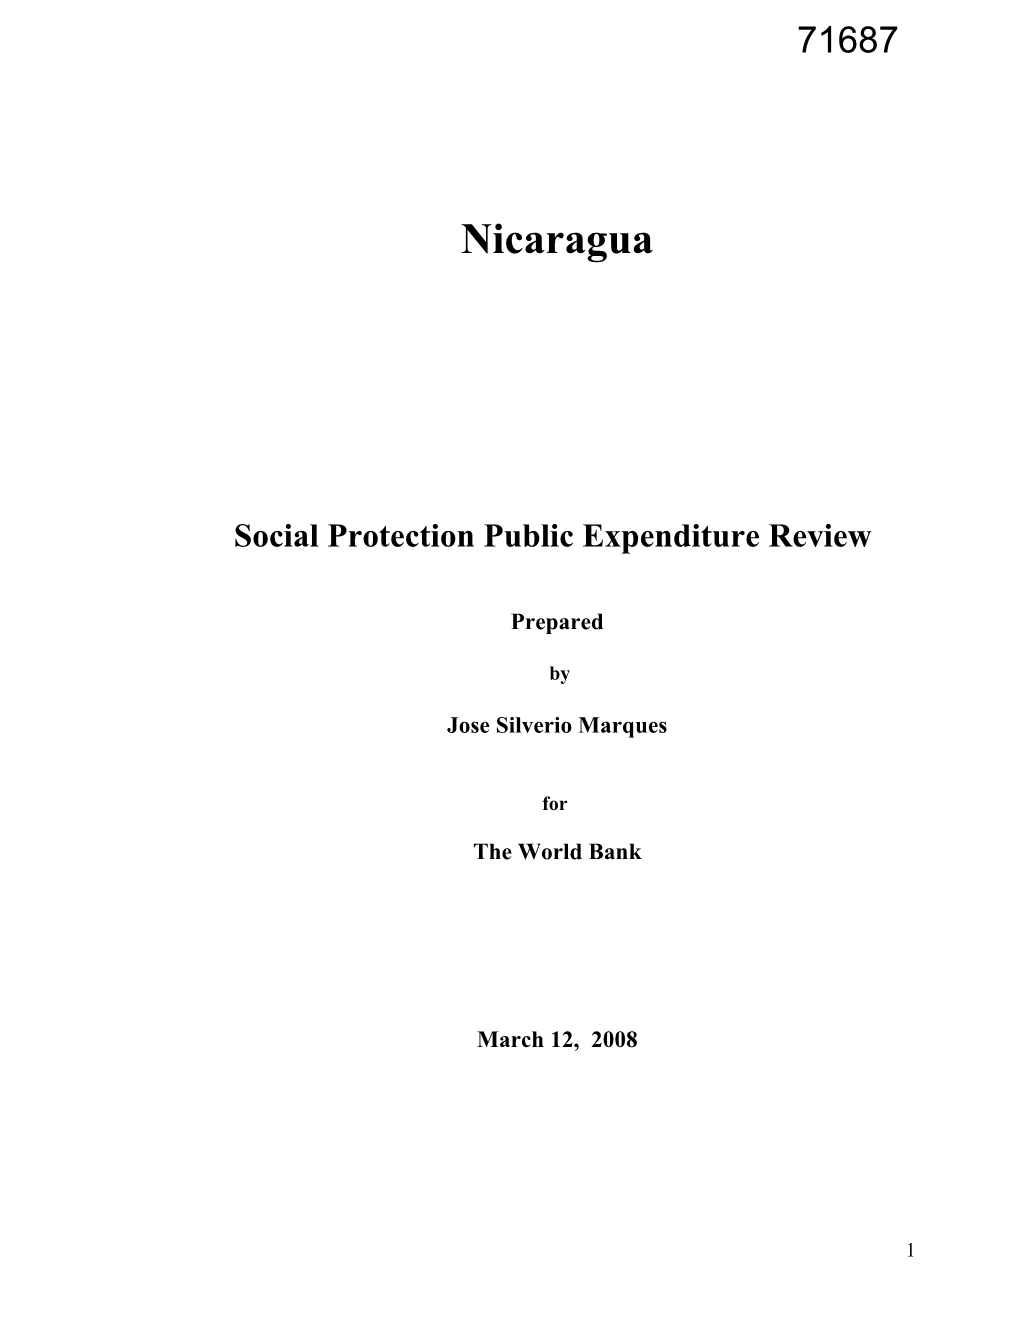 Social Protection Public Expenditure Review